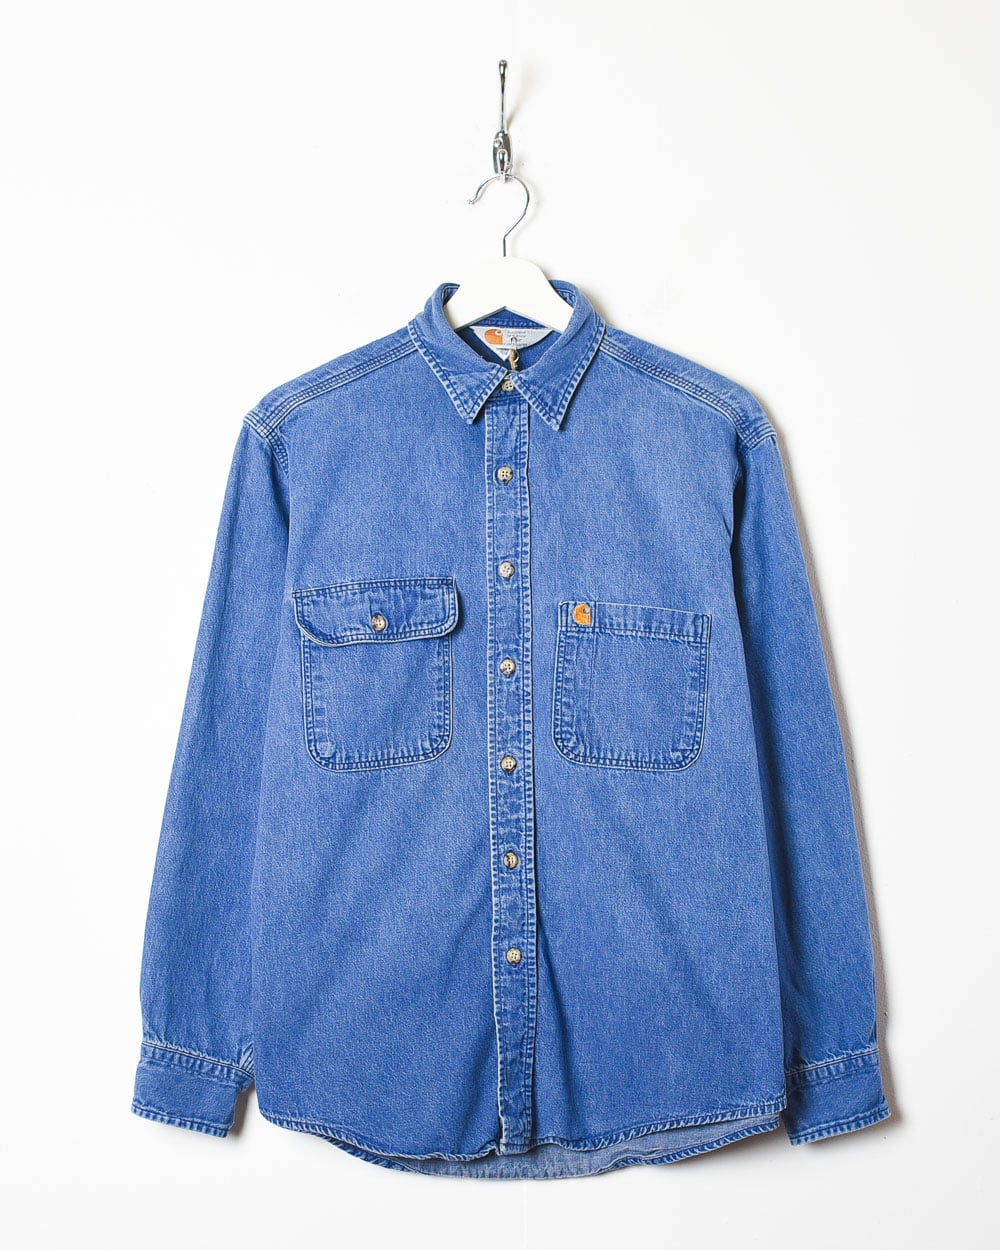 Blue Carhartt Denim Shirt - Medium